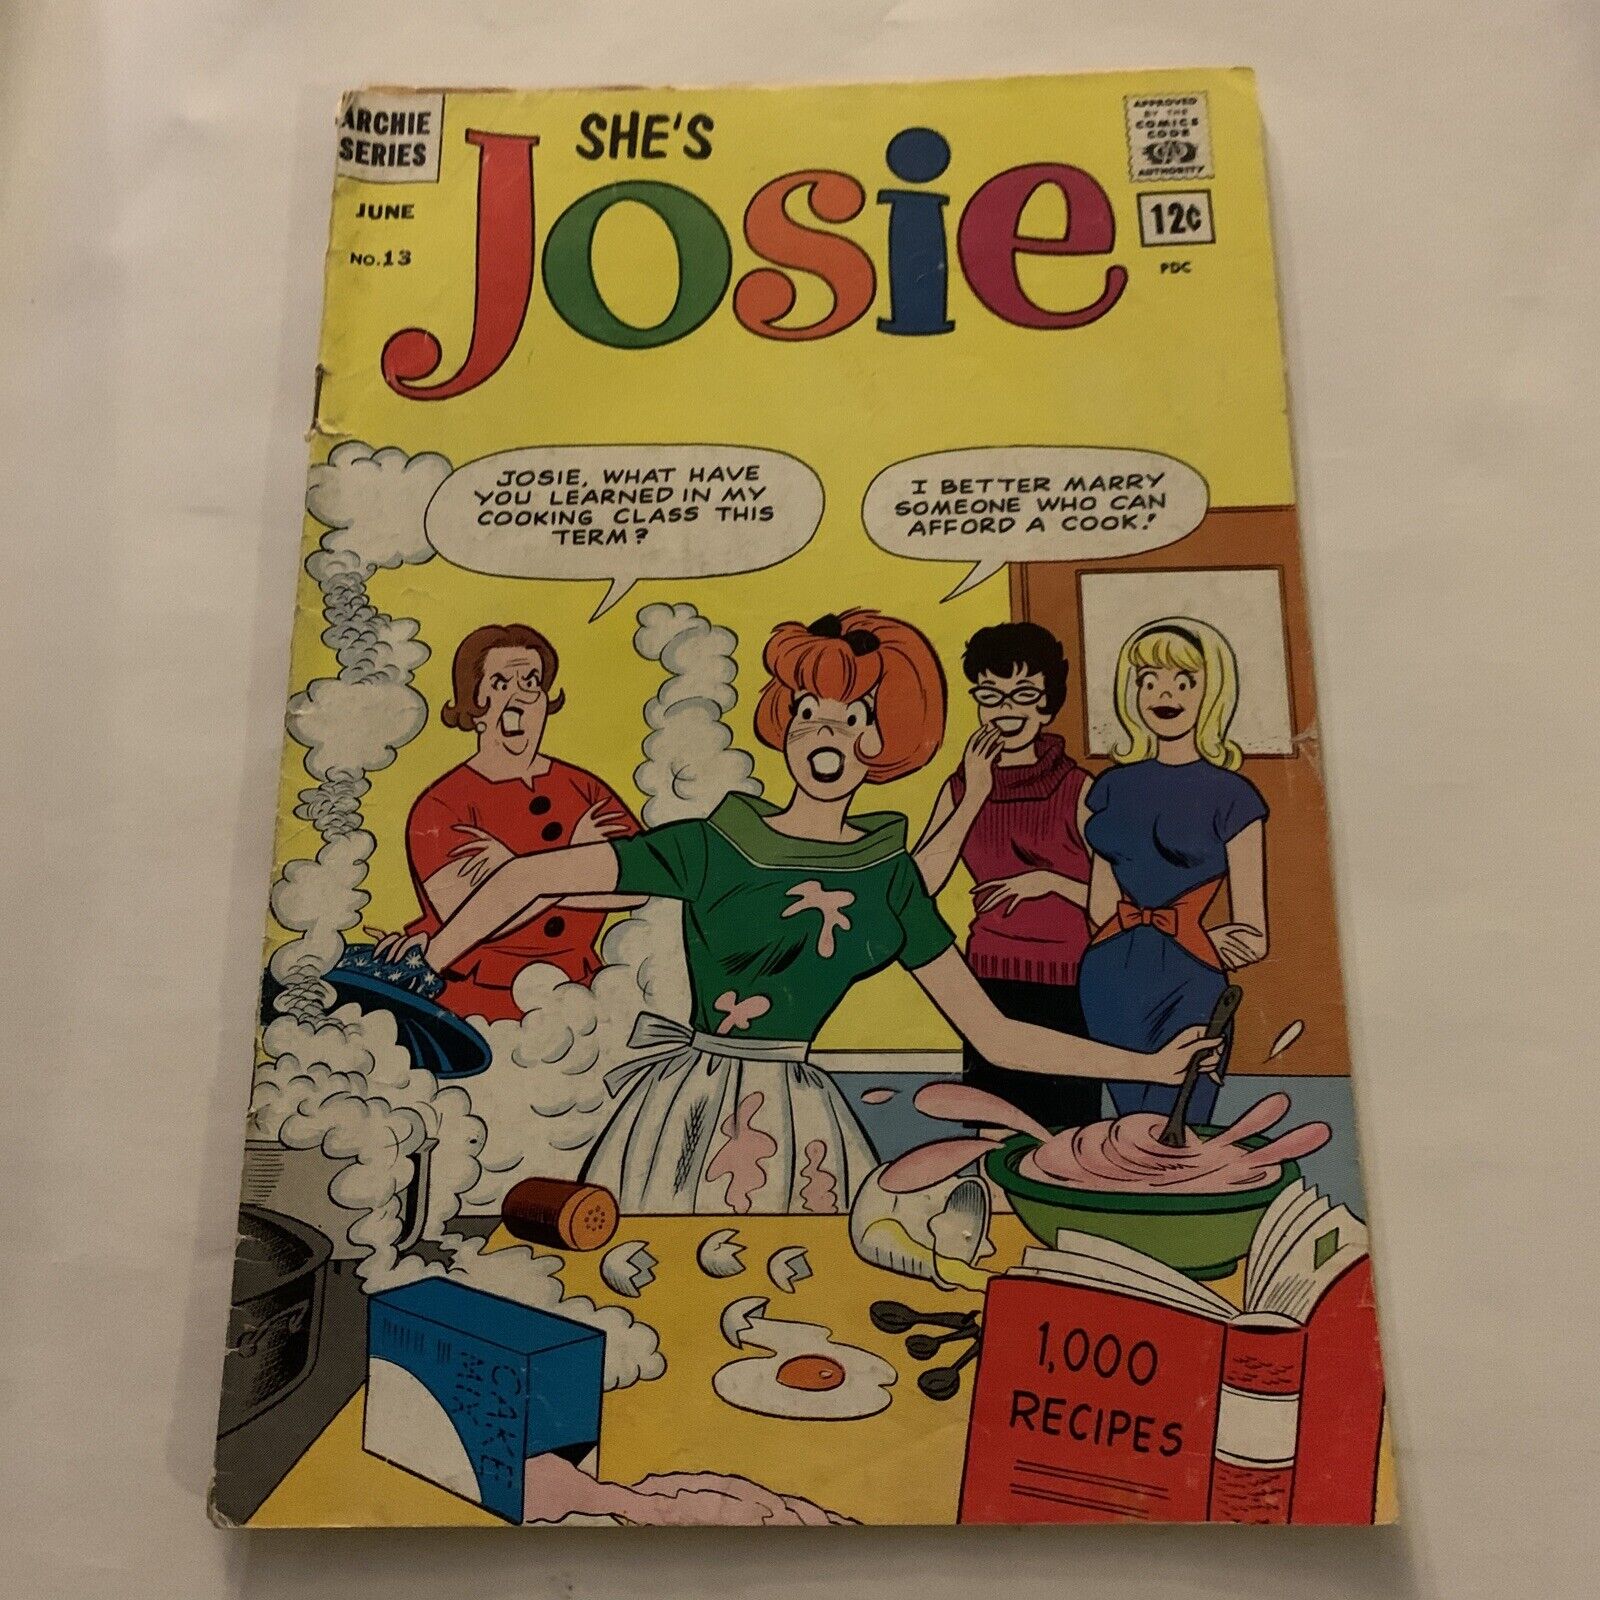 She’s Josie No. 13 June 1965 Archie Series Comic Book